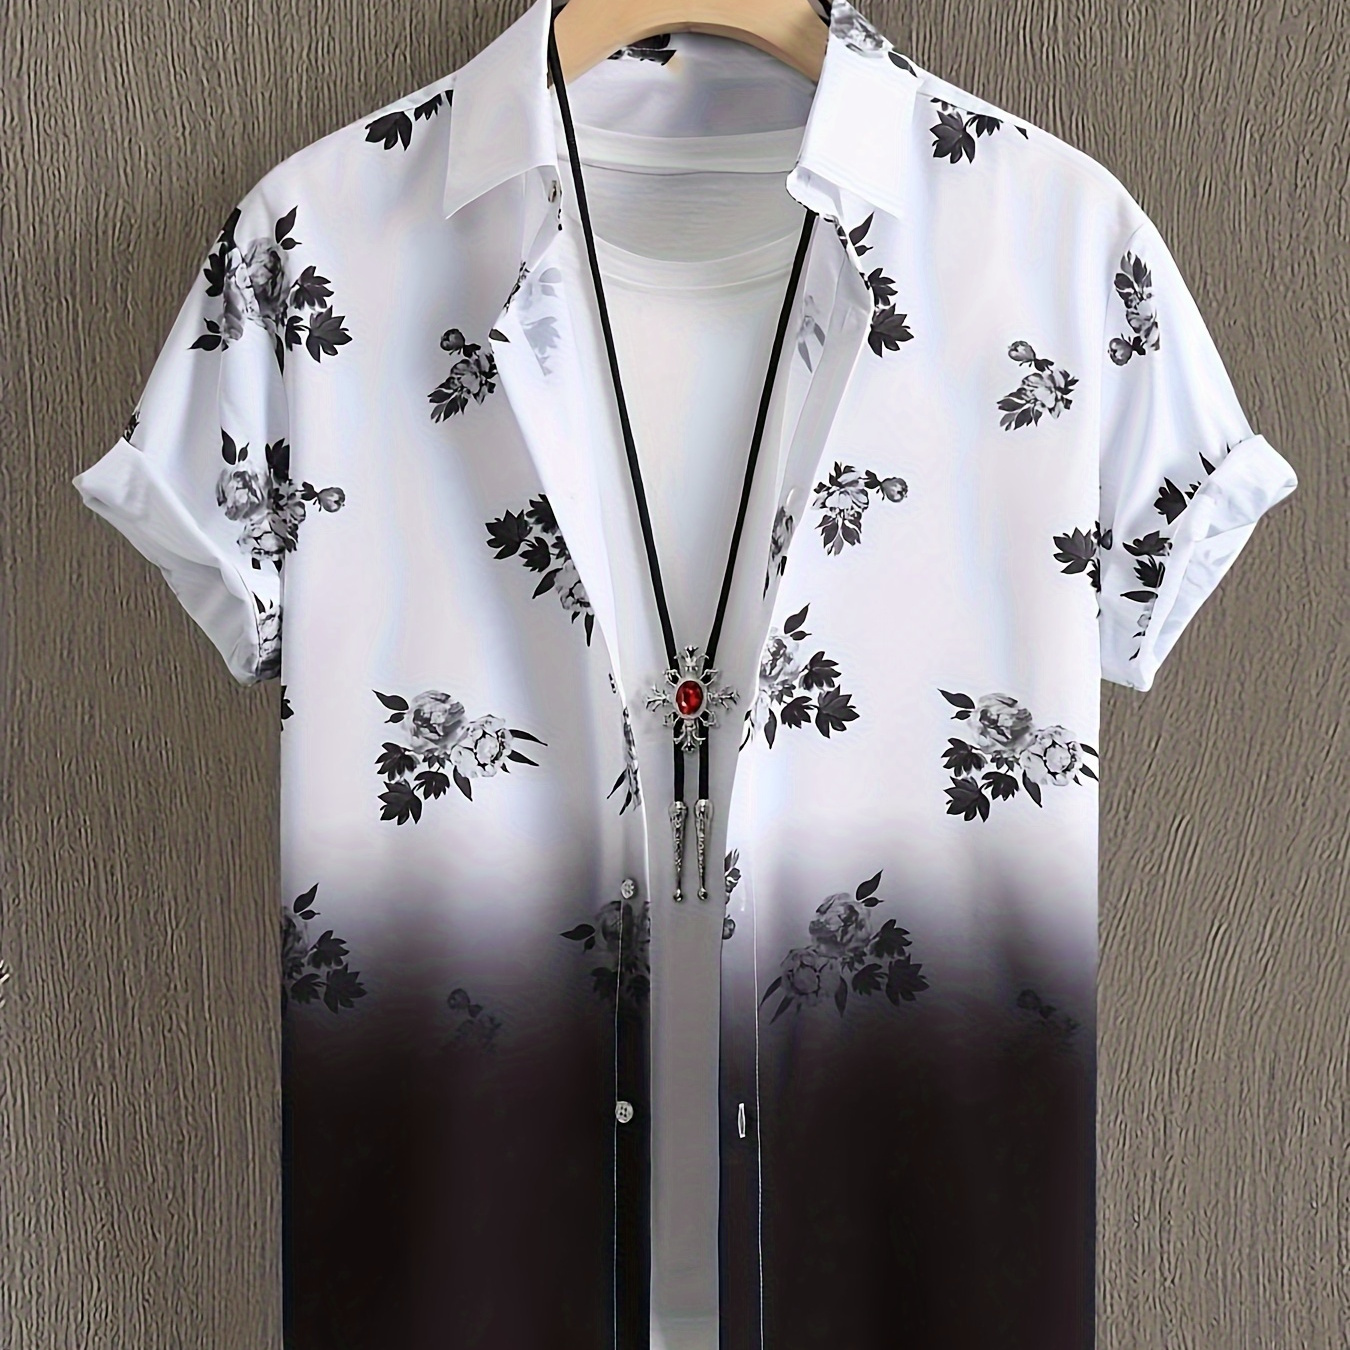 

Men's Tropical Floral Print Short Sleeve Shirt, Casual Summer Hawaiian Vacation Style, Button-up Top